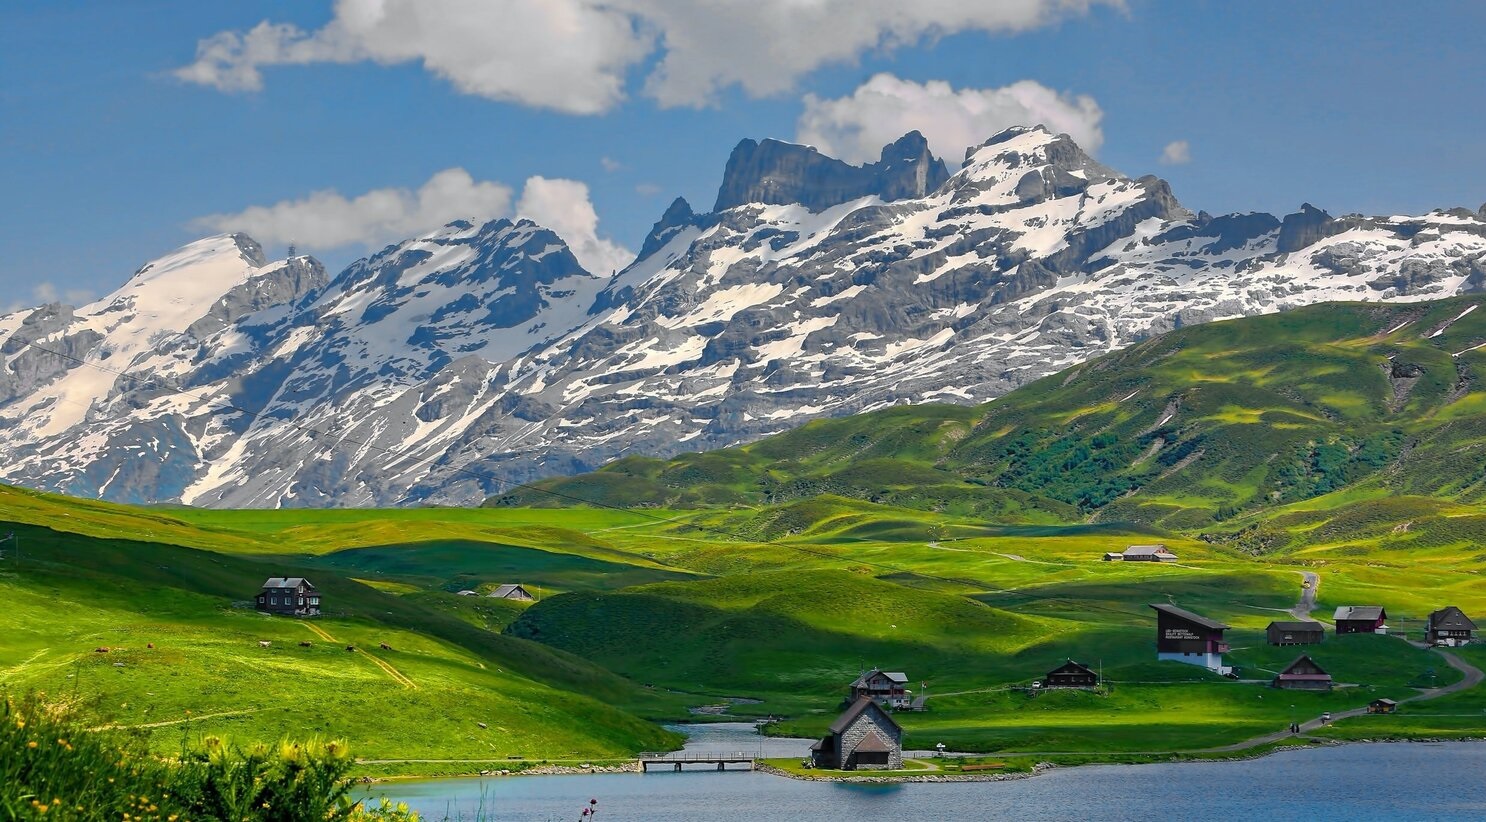 کوهستان سوئیس - عکس طبیعت زیبای سوئیس